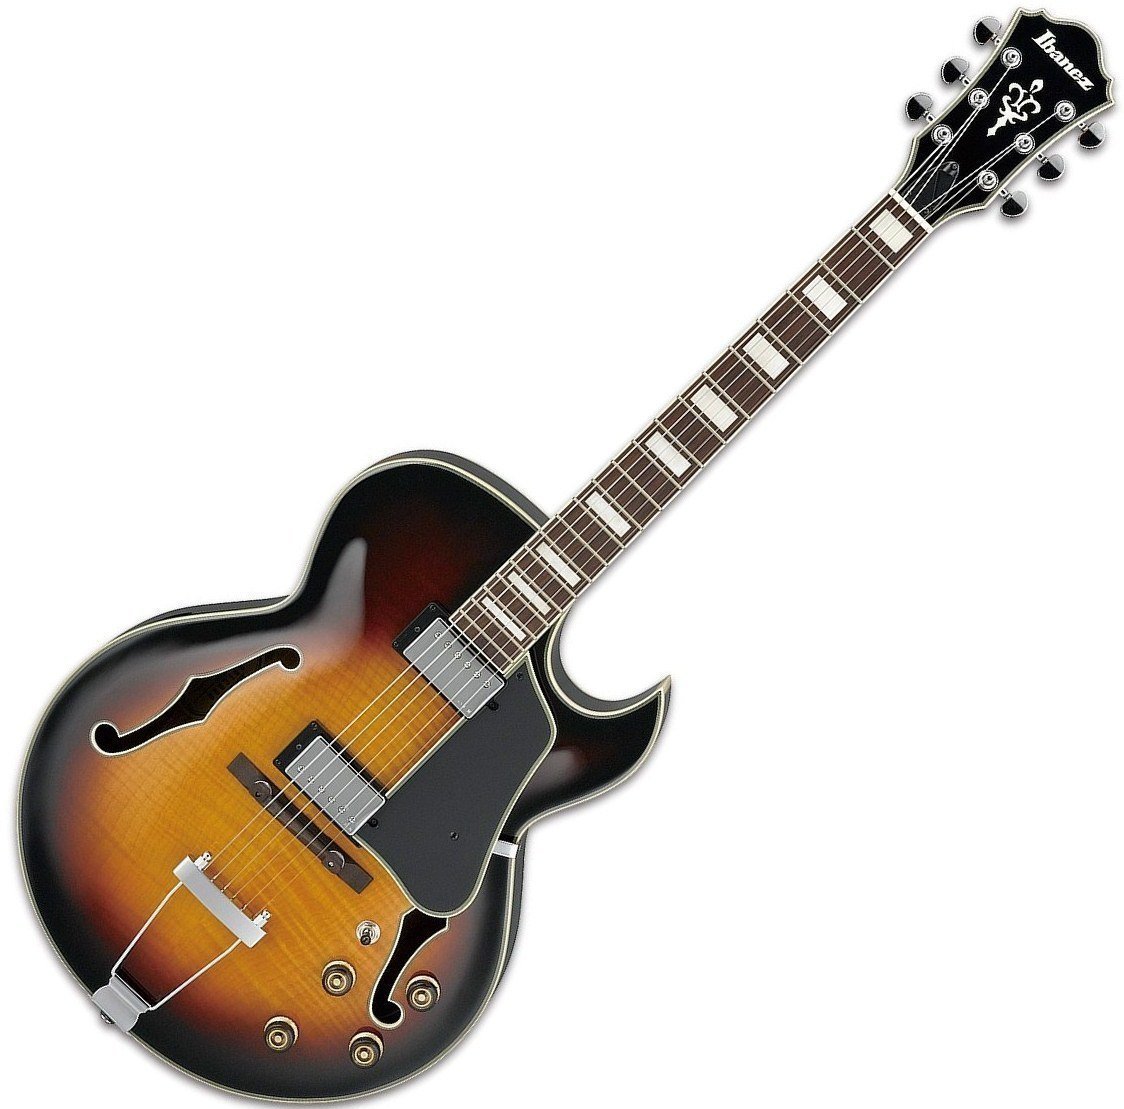 Semiakustická kytara Ibanez AKJ 95 Vintage Yellow Sunburst